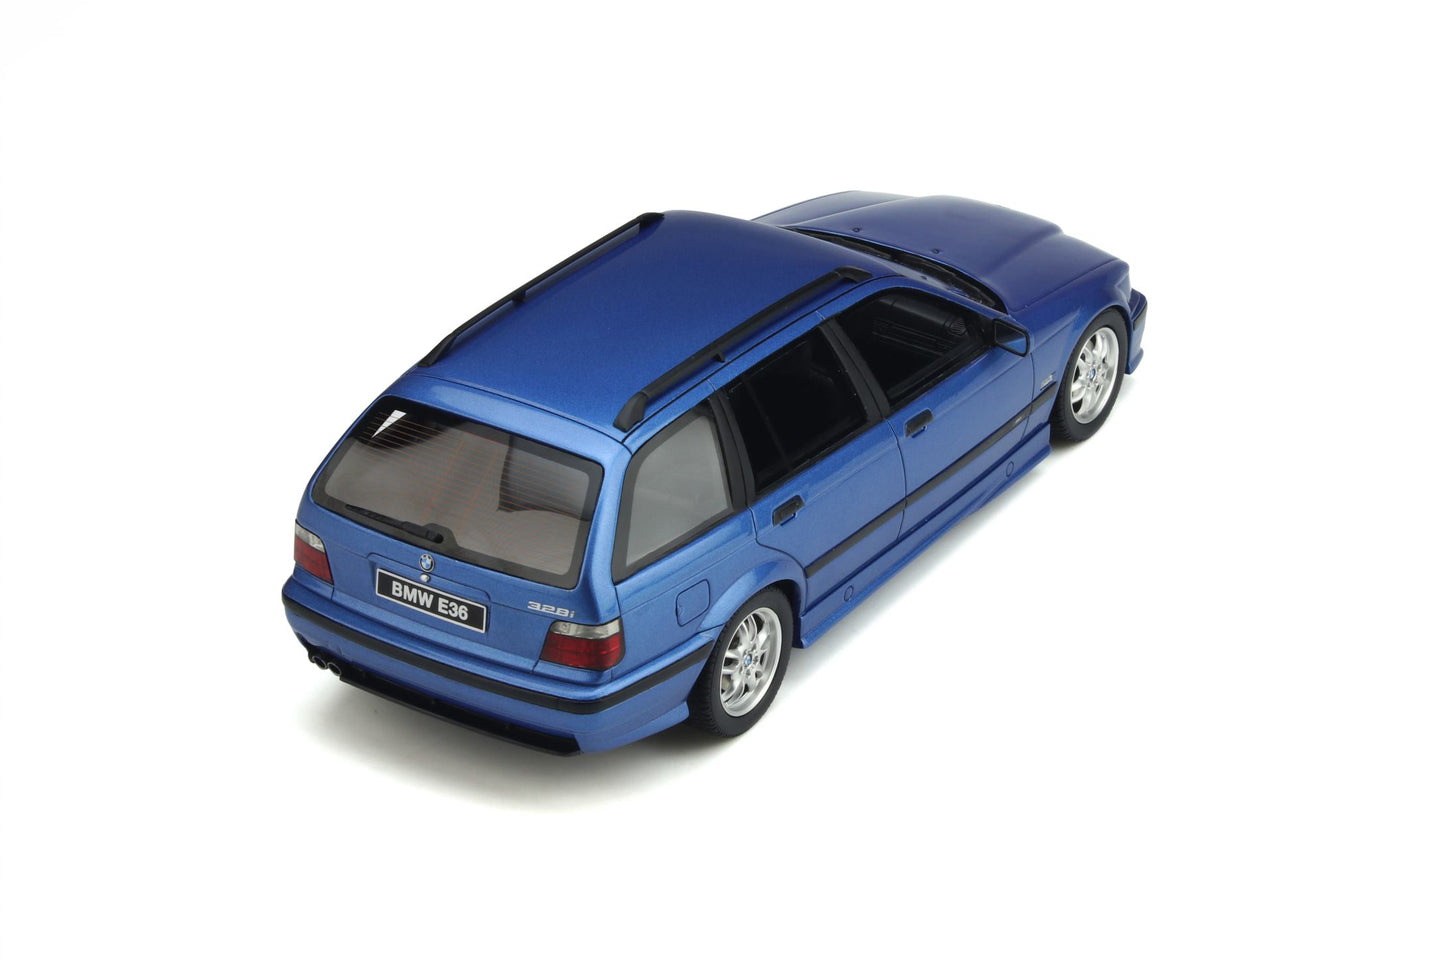 1:18 BMW 328i Touring E36 M Pack, 1997, blåmetallic, OT358, lukket model, limited